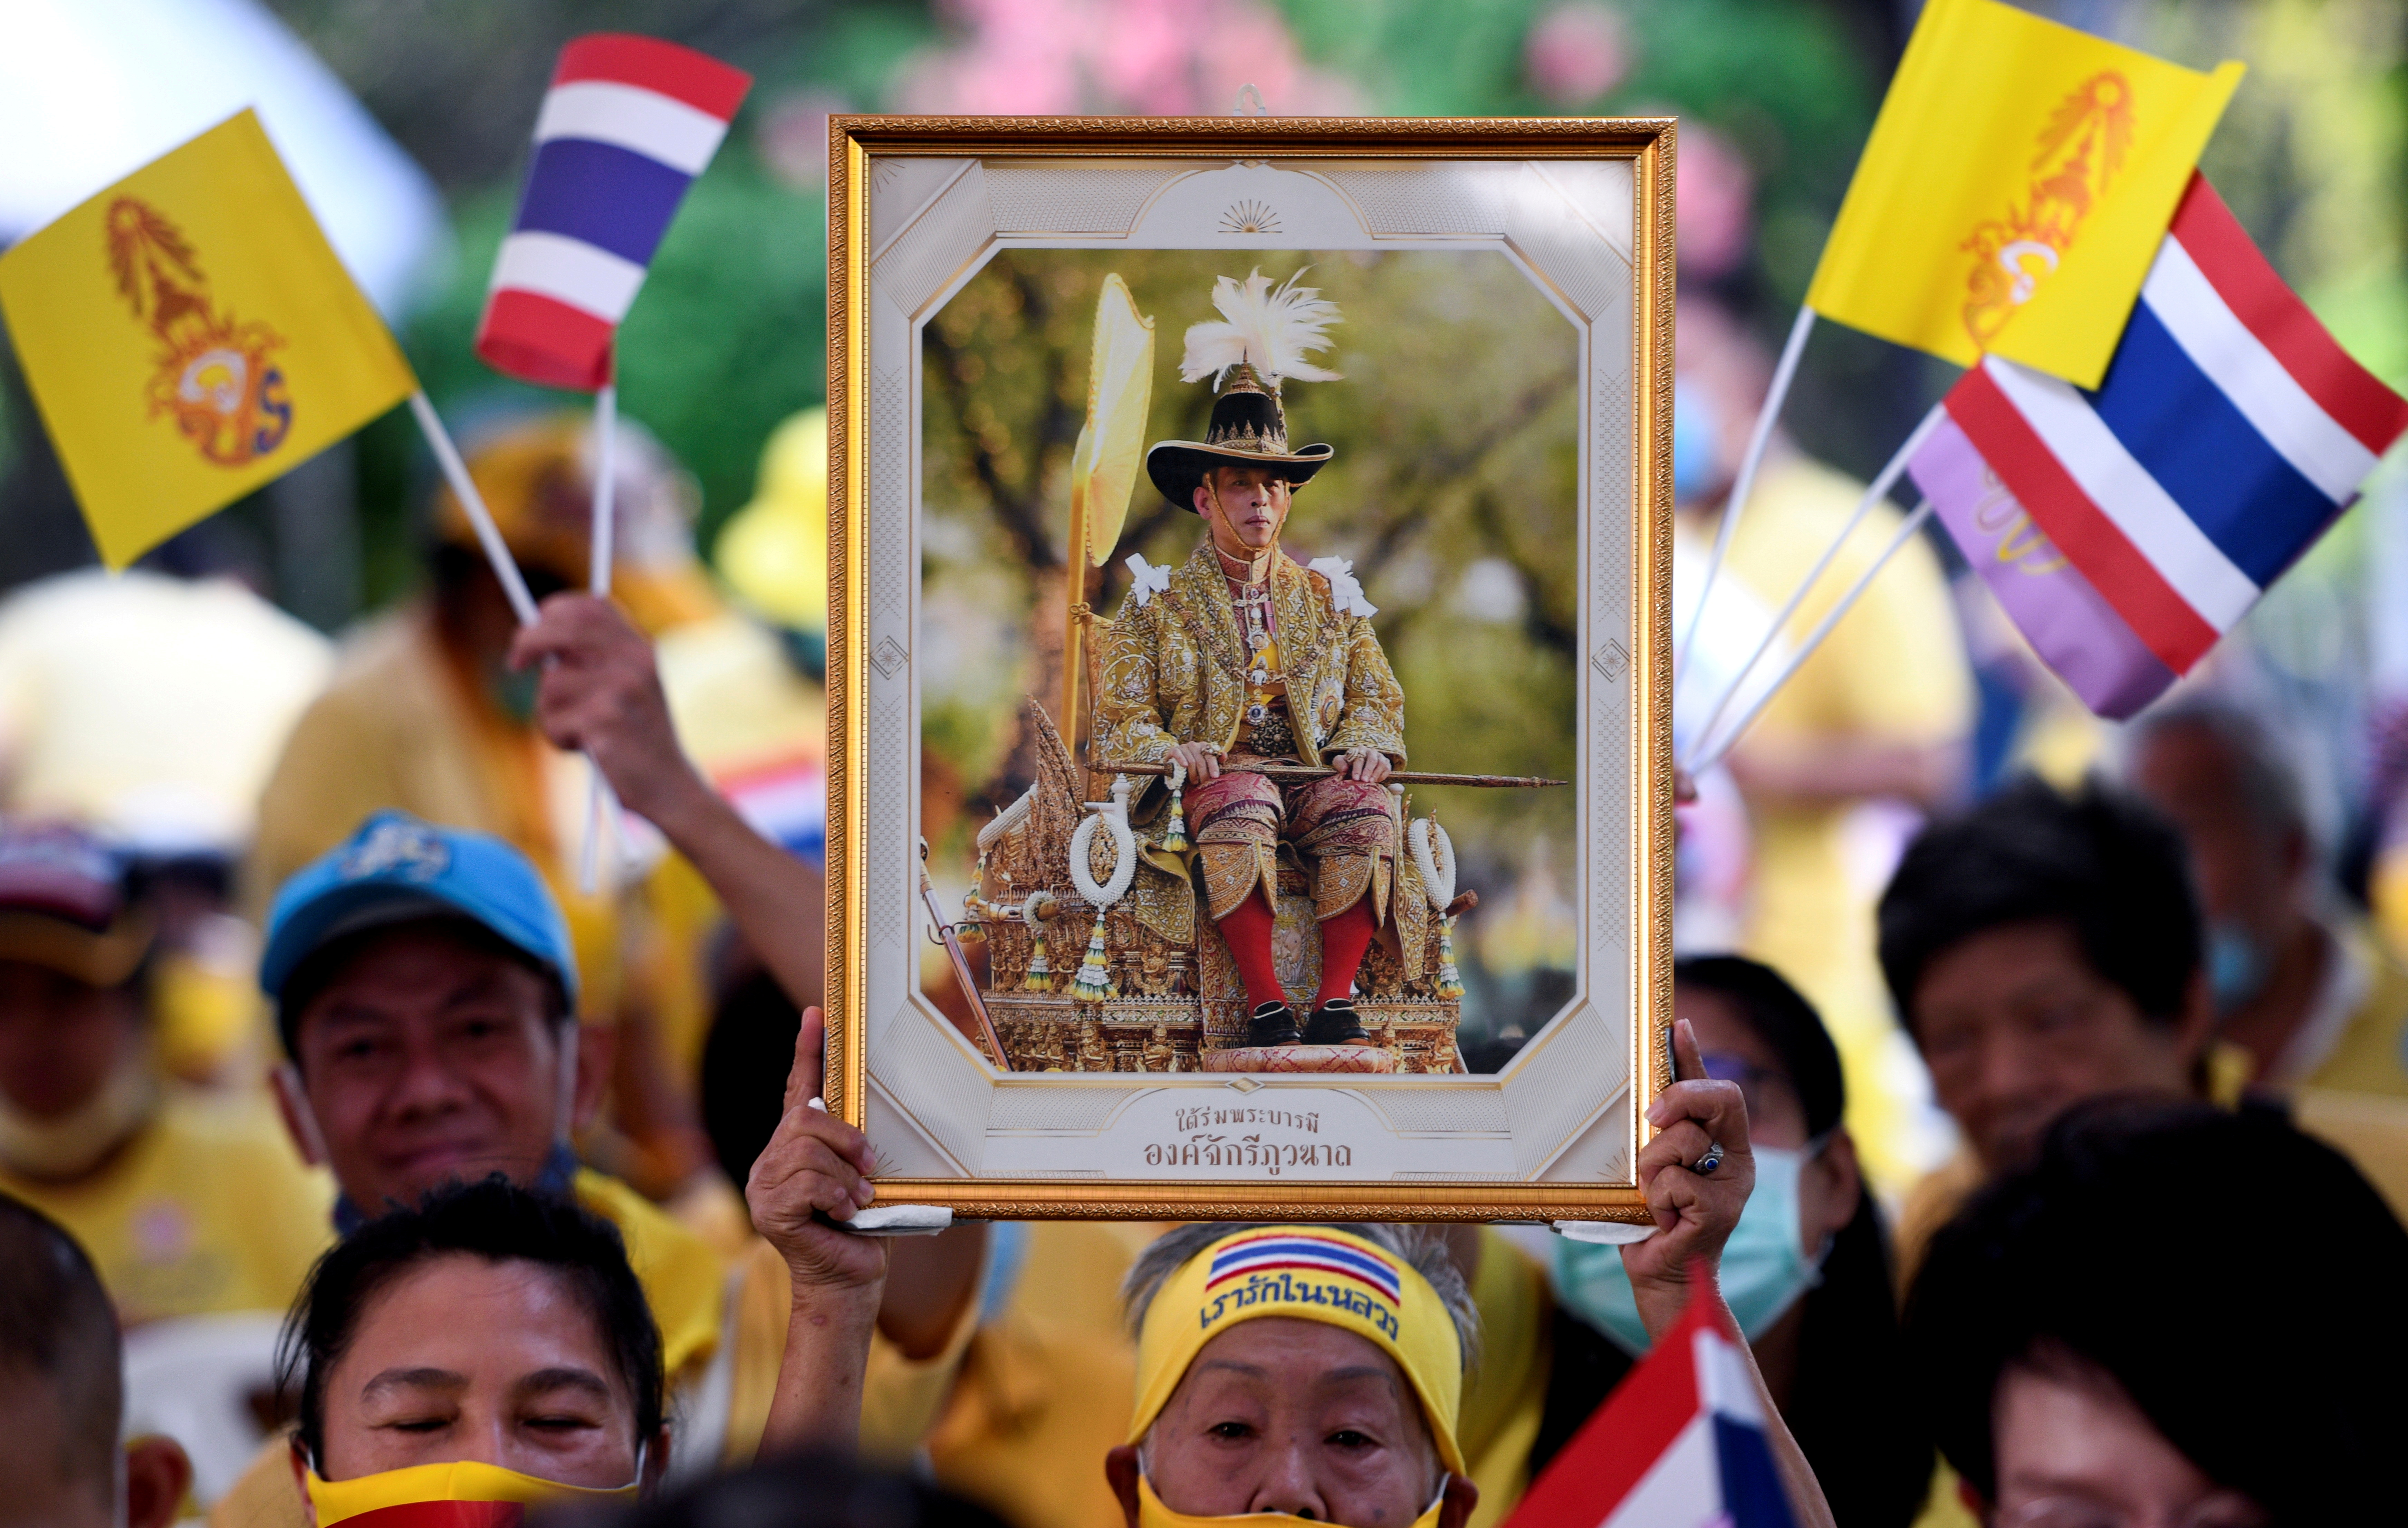 A person holds a portrait of Thailand's King Maha Vajiralongkorn, as royalists wait for the arrival of royal couple, in Bangkok, Thailand, November 25, 2020. REUTERS/Chalinee Thirasupa/File Photo